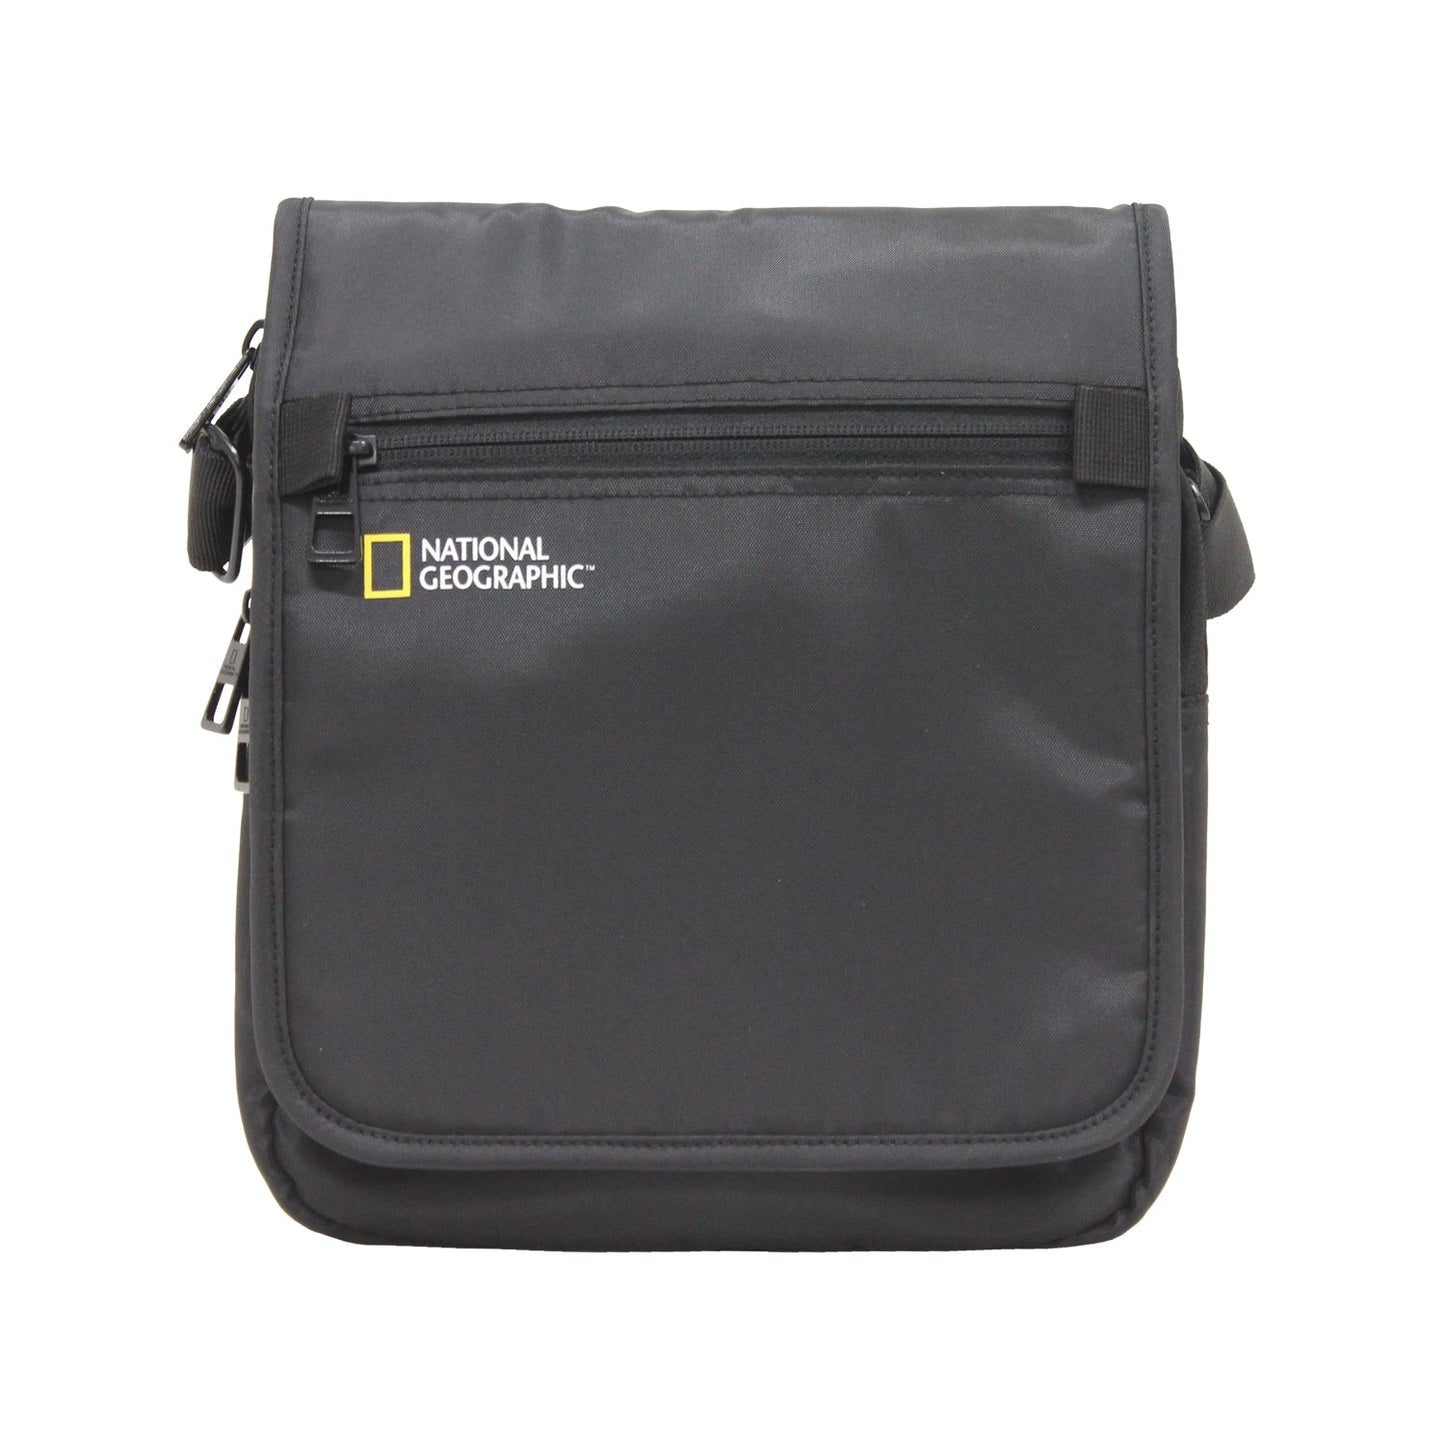 National Geographic Transform - Voorkant Zwart schoudertas met flap | luggage4u.be